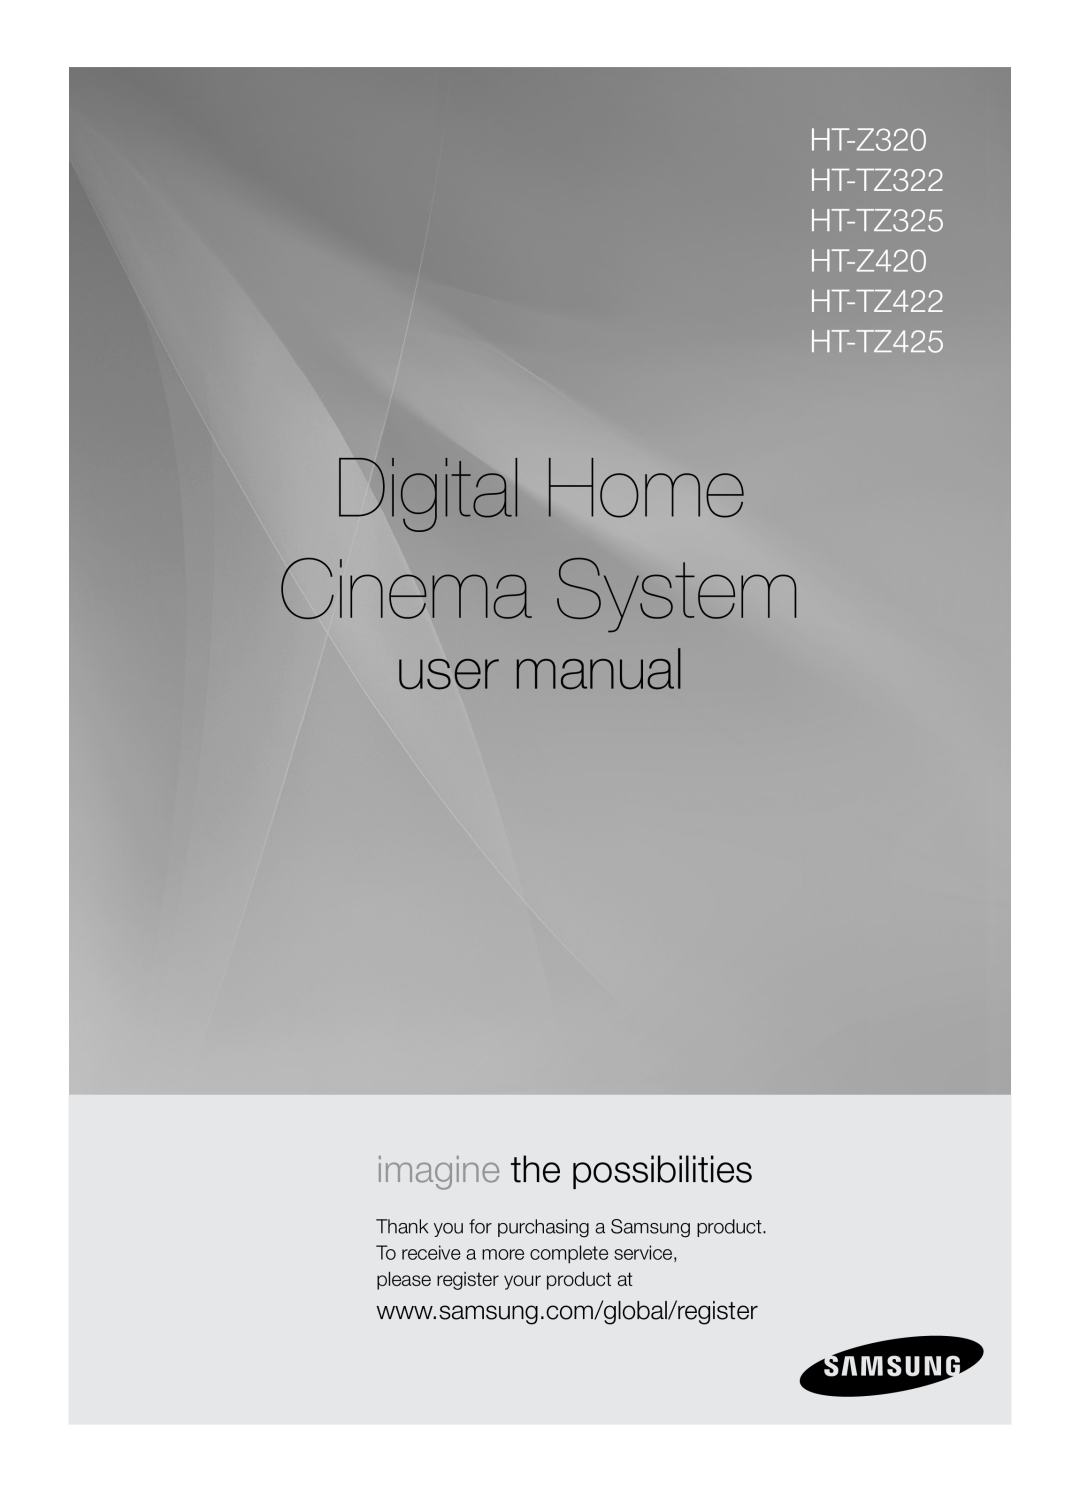 Samsung HT-TZ325T/SIM, HT-Z220T/MEA, HT-Z320T/MEA manual Digital Home Cinema System, user manual, imagine the possibilities 